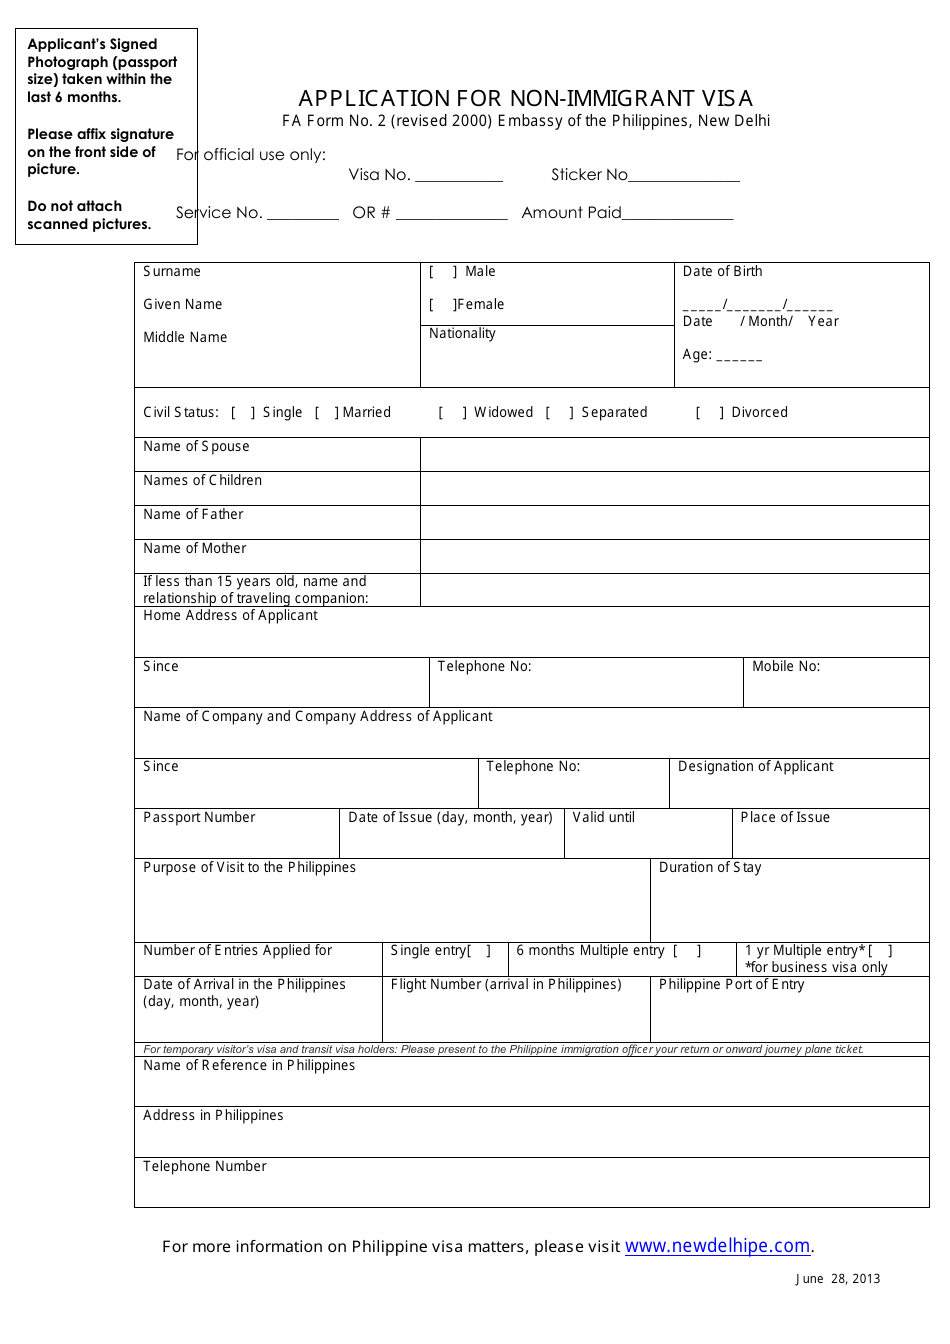 FA Form 2 Application for Philippines Non-immigrant Visa - Embassy of the Philippines - New Delhi, Delhi, India, Page 1